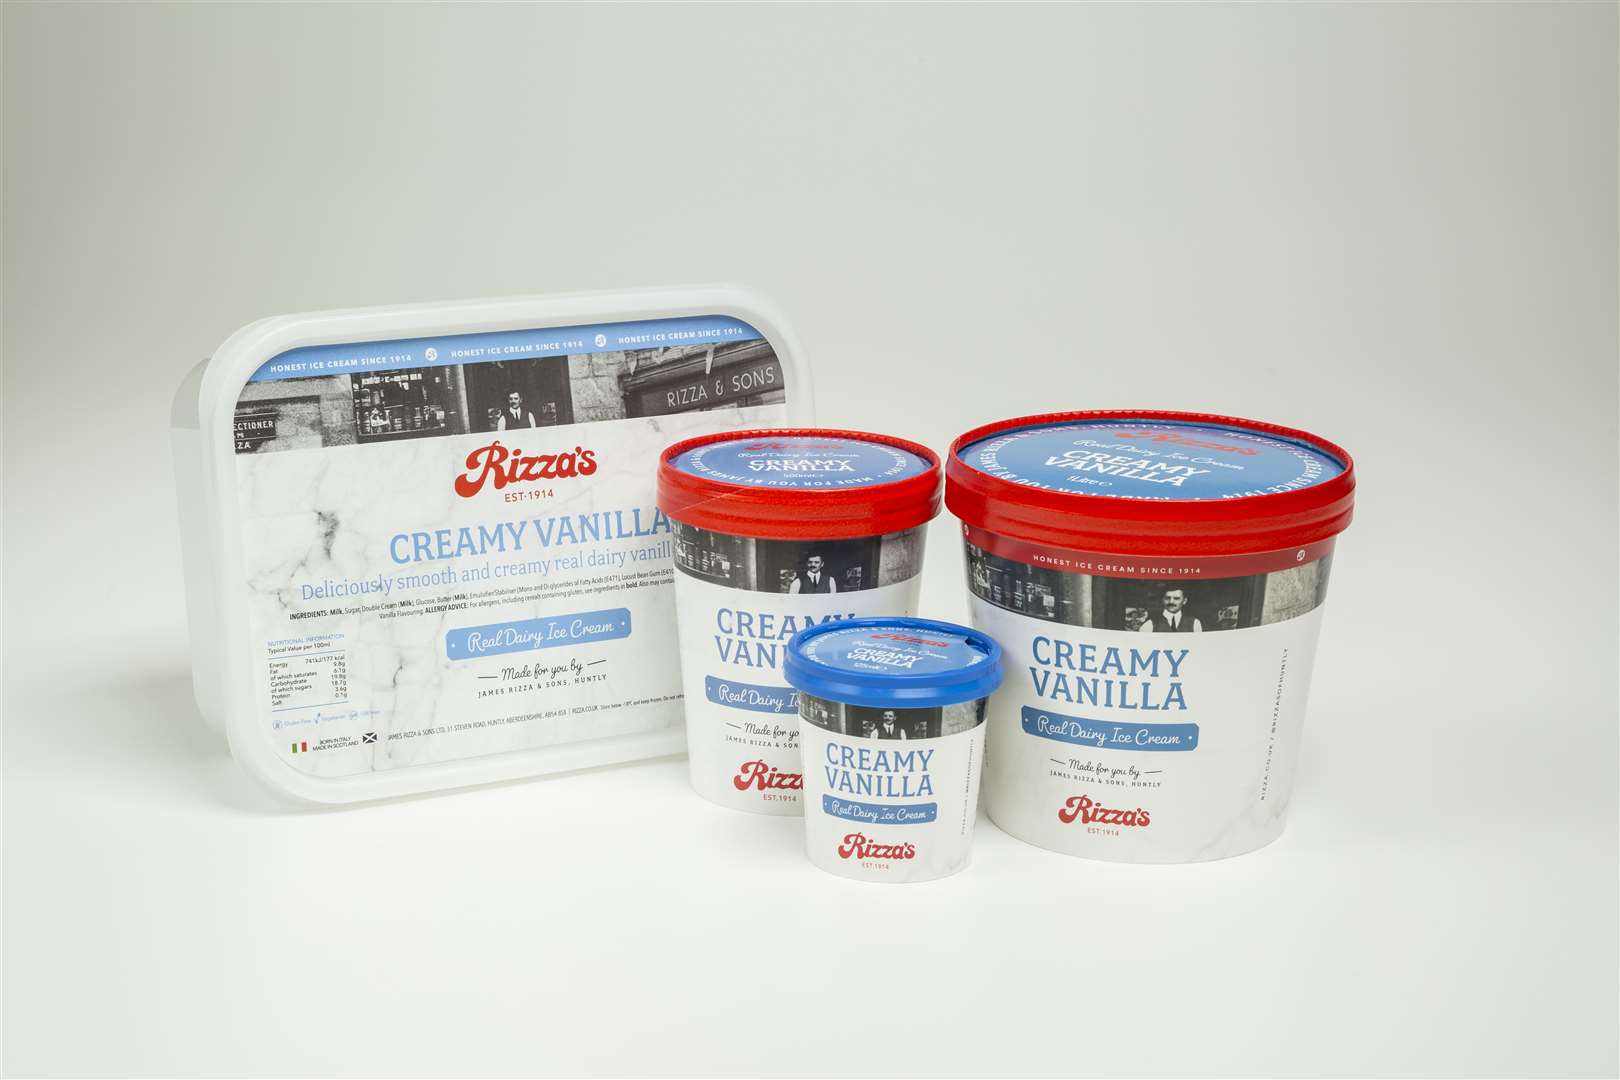 Rizza's dairy creamy vanilla ice cream was recognised in the awards.